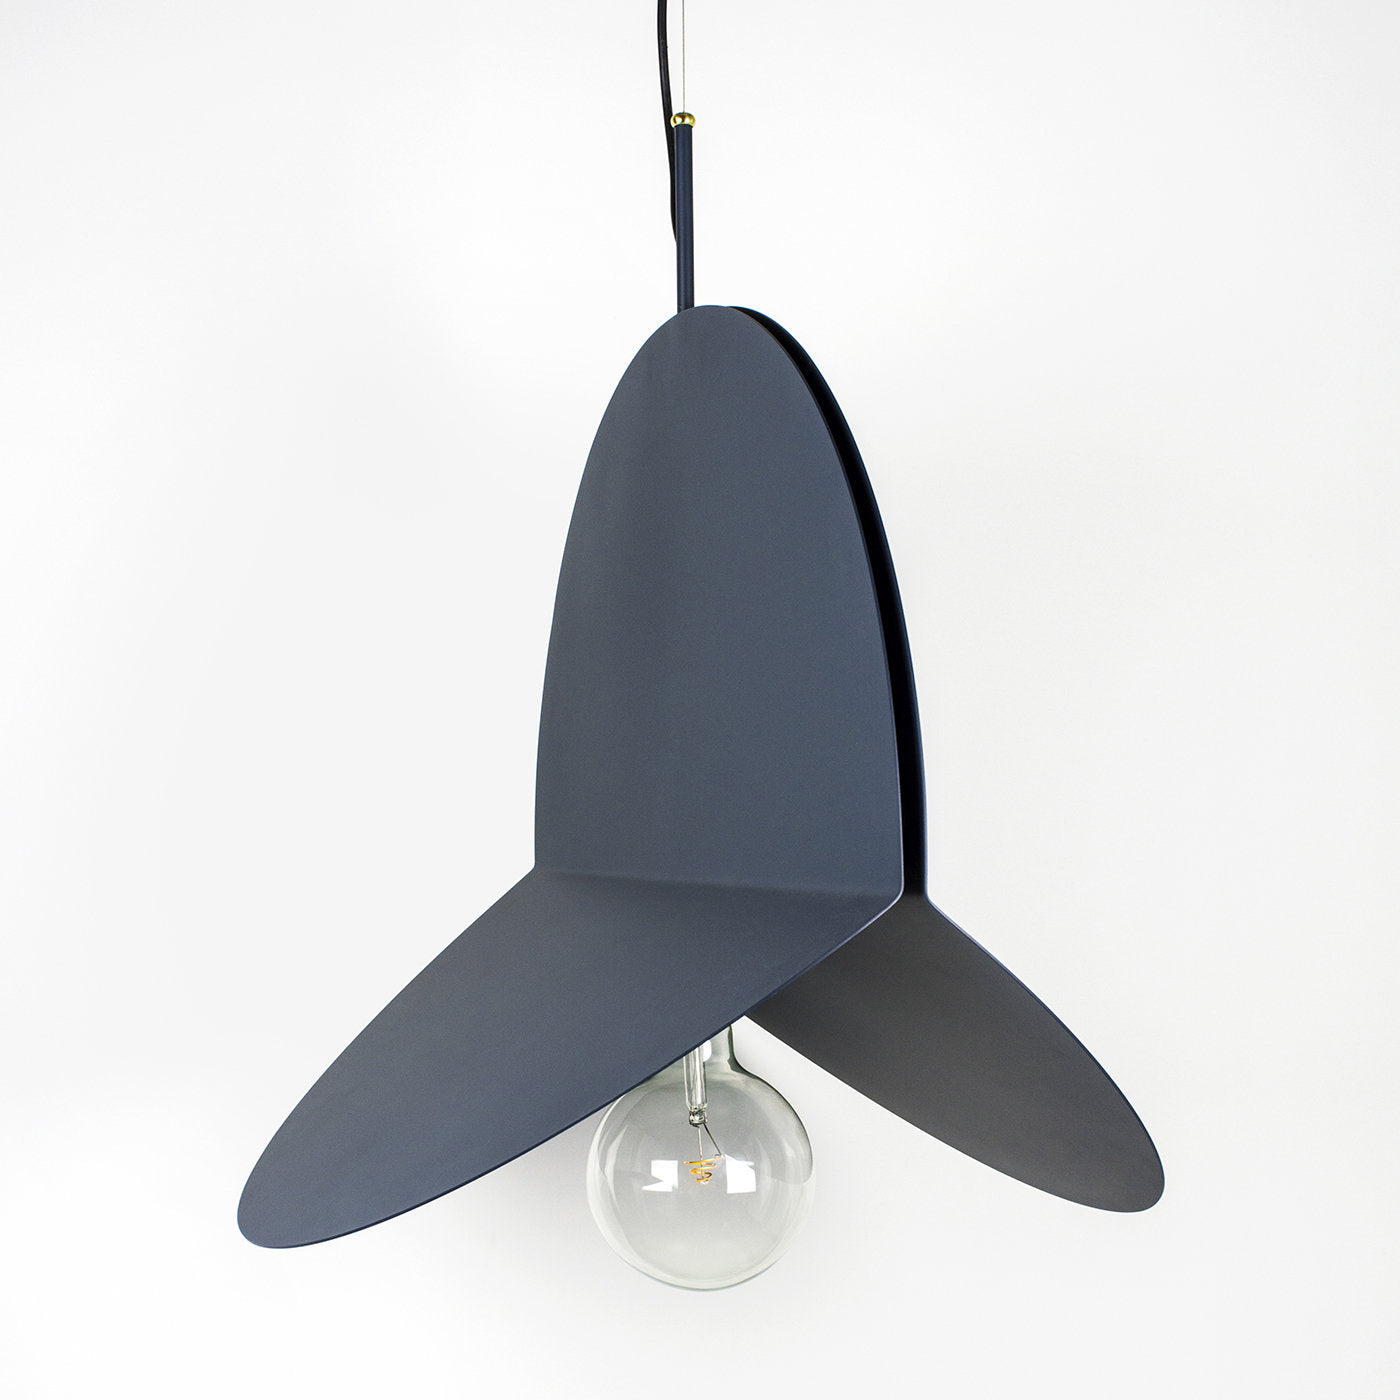 Pago S Pendant Lamp by Alalda Design - Alternative view 1